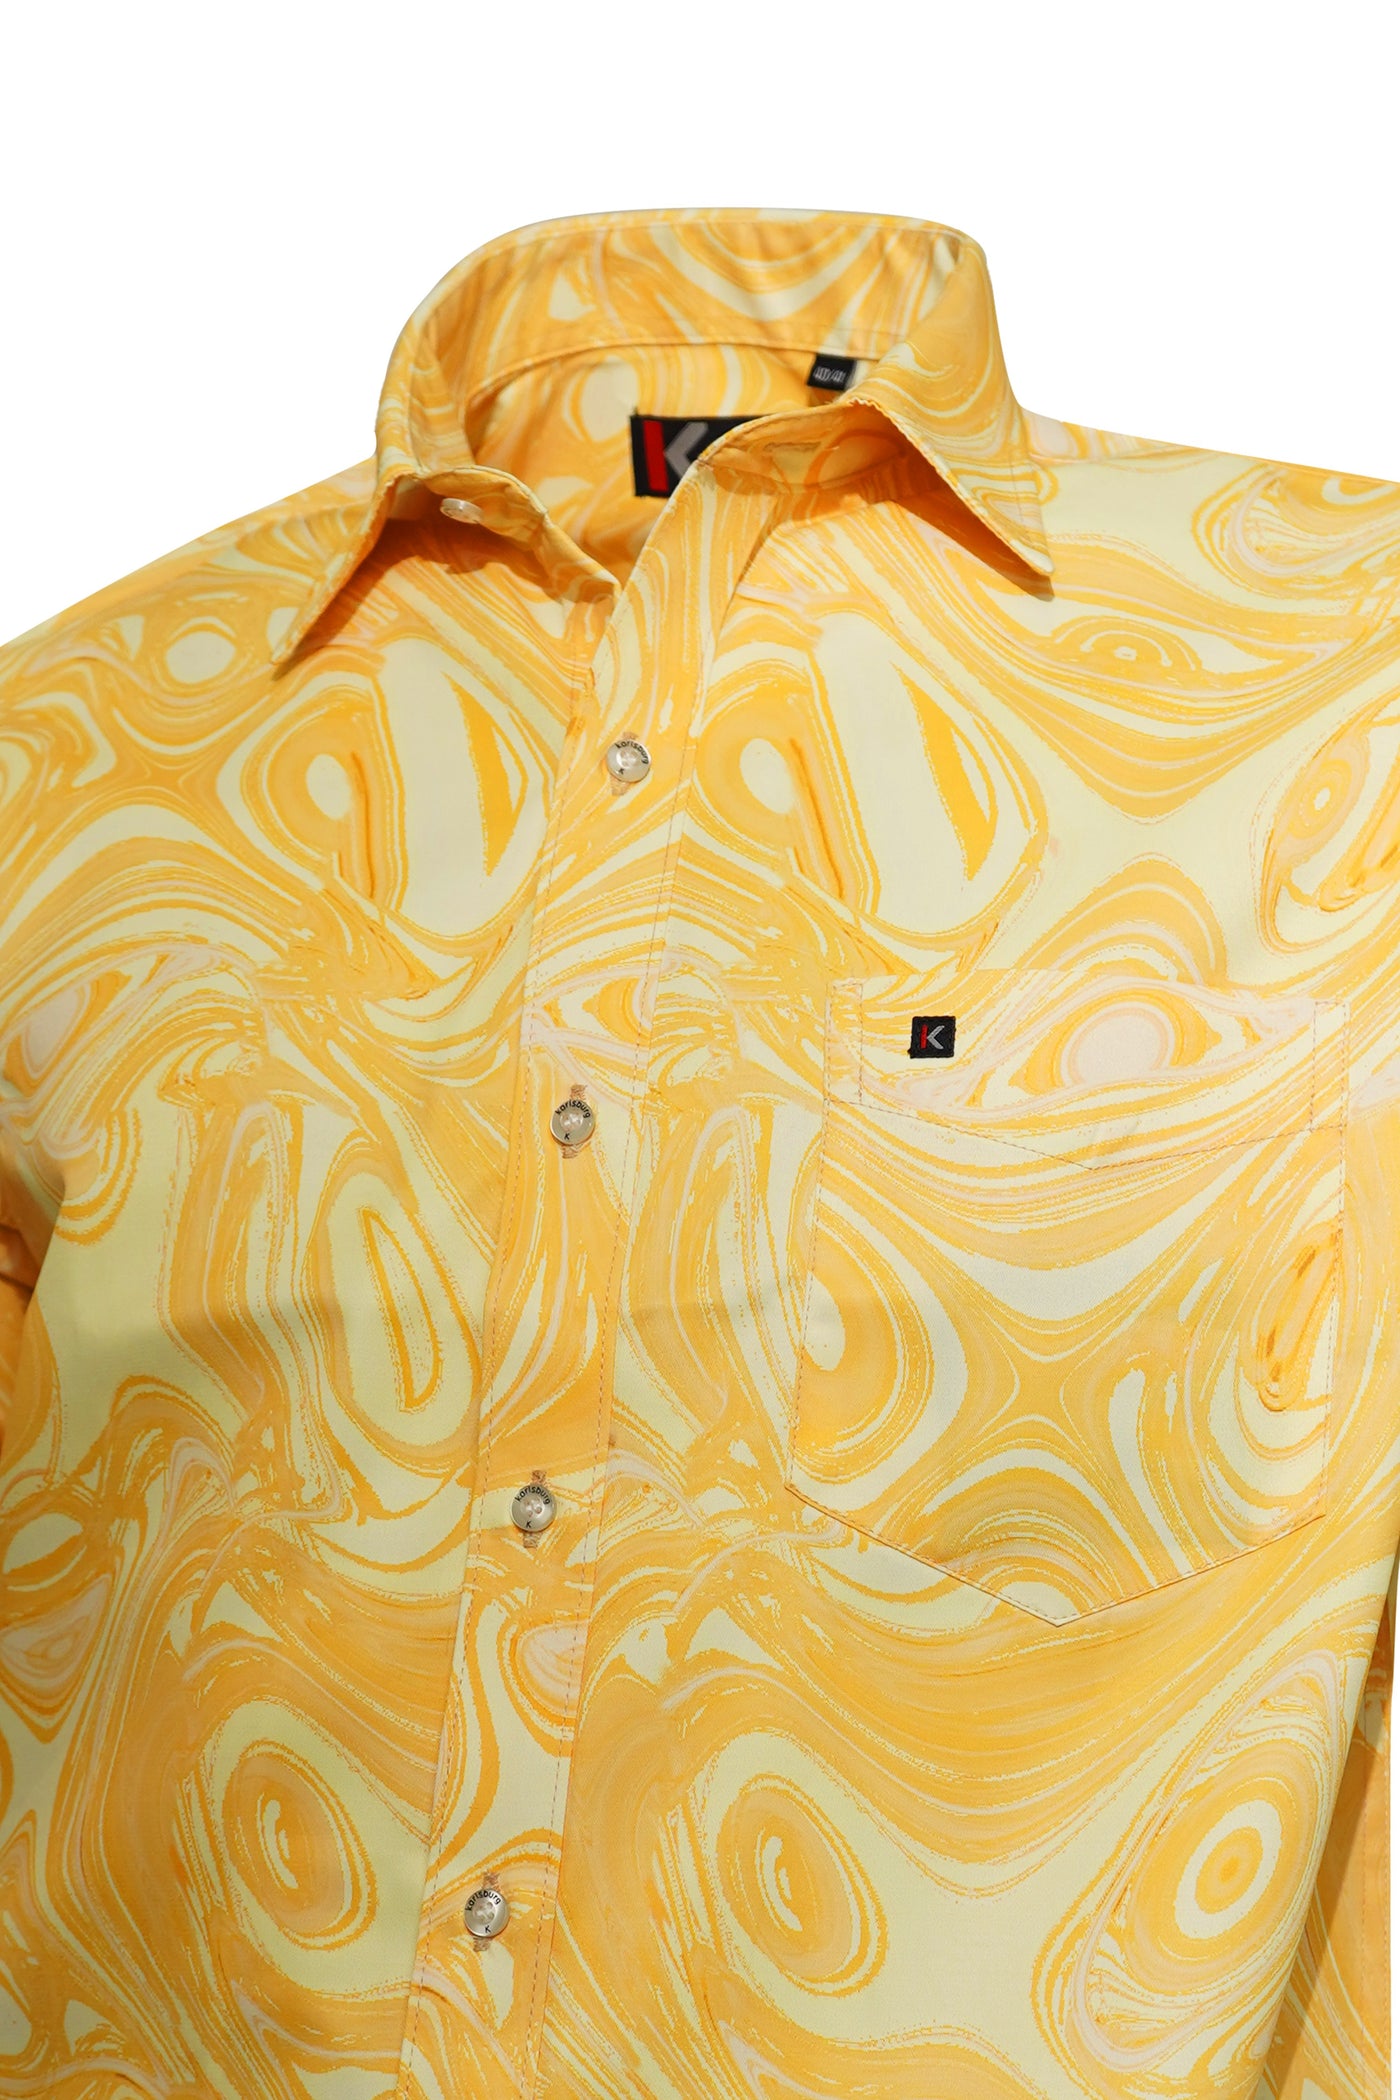 Men's Yellow Print Shirt